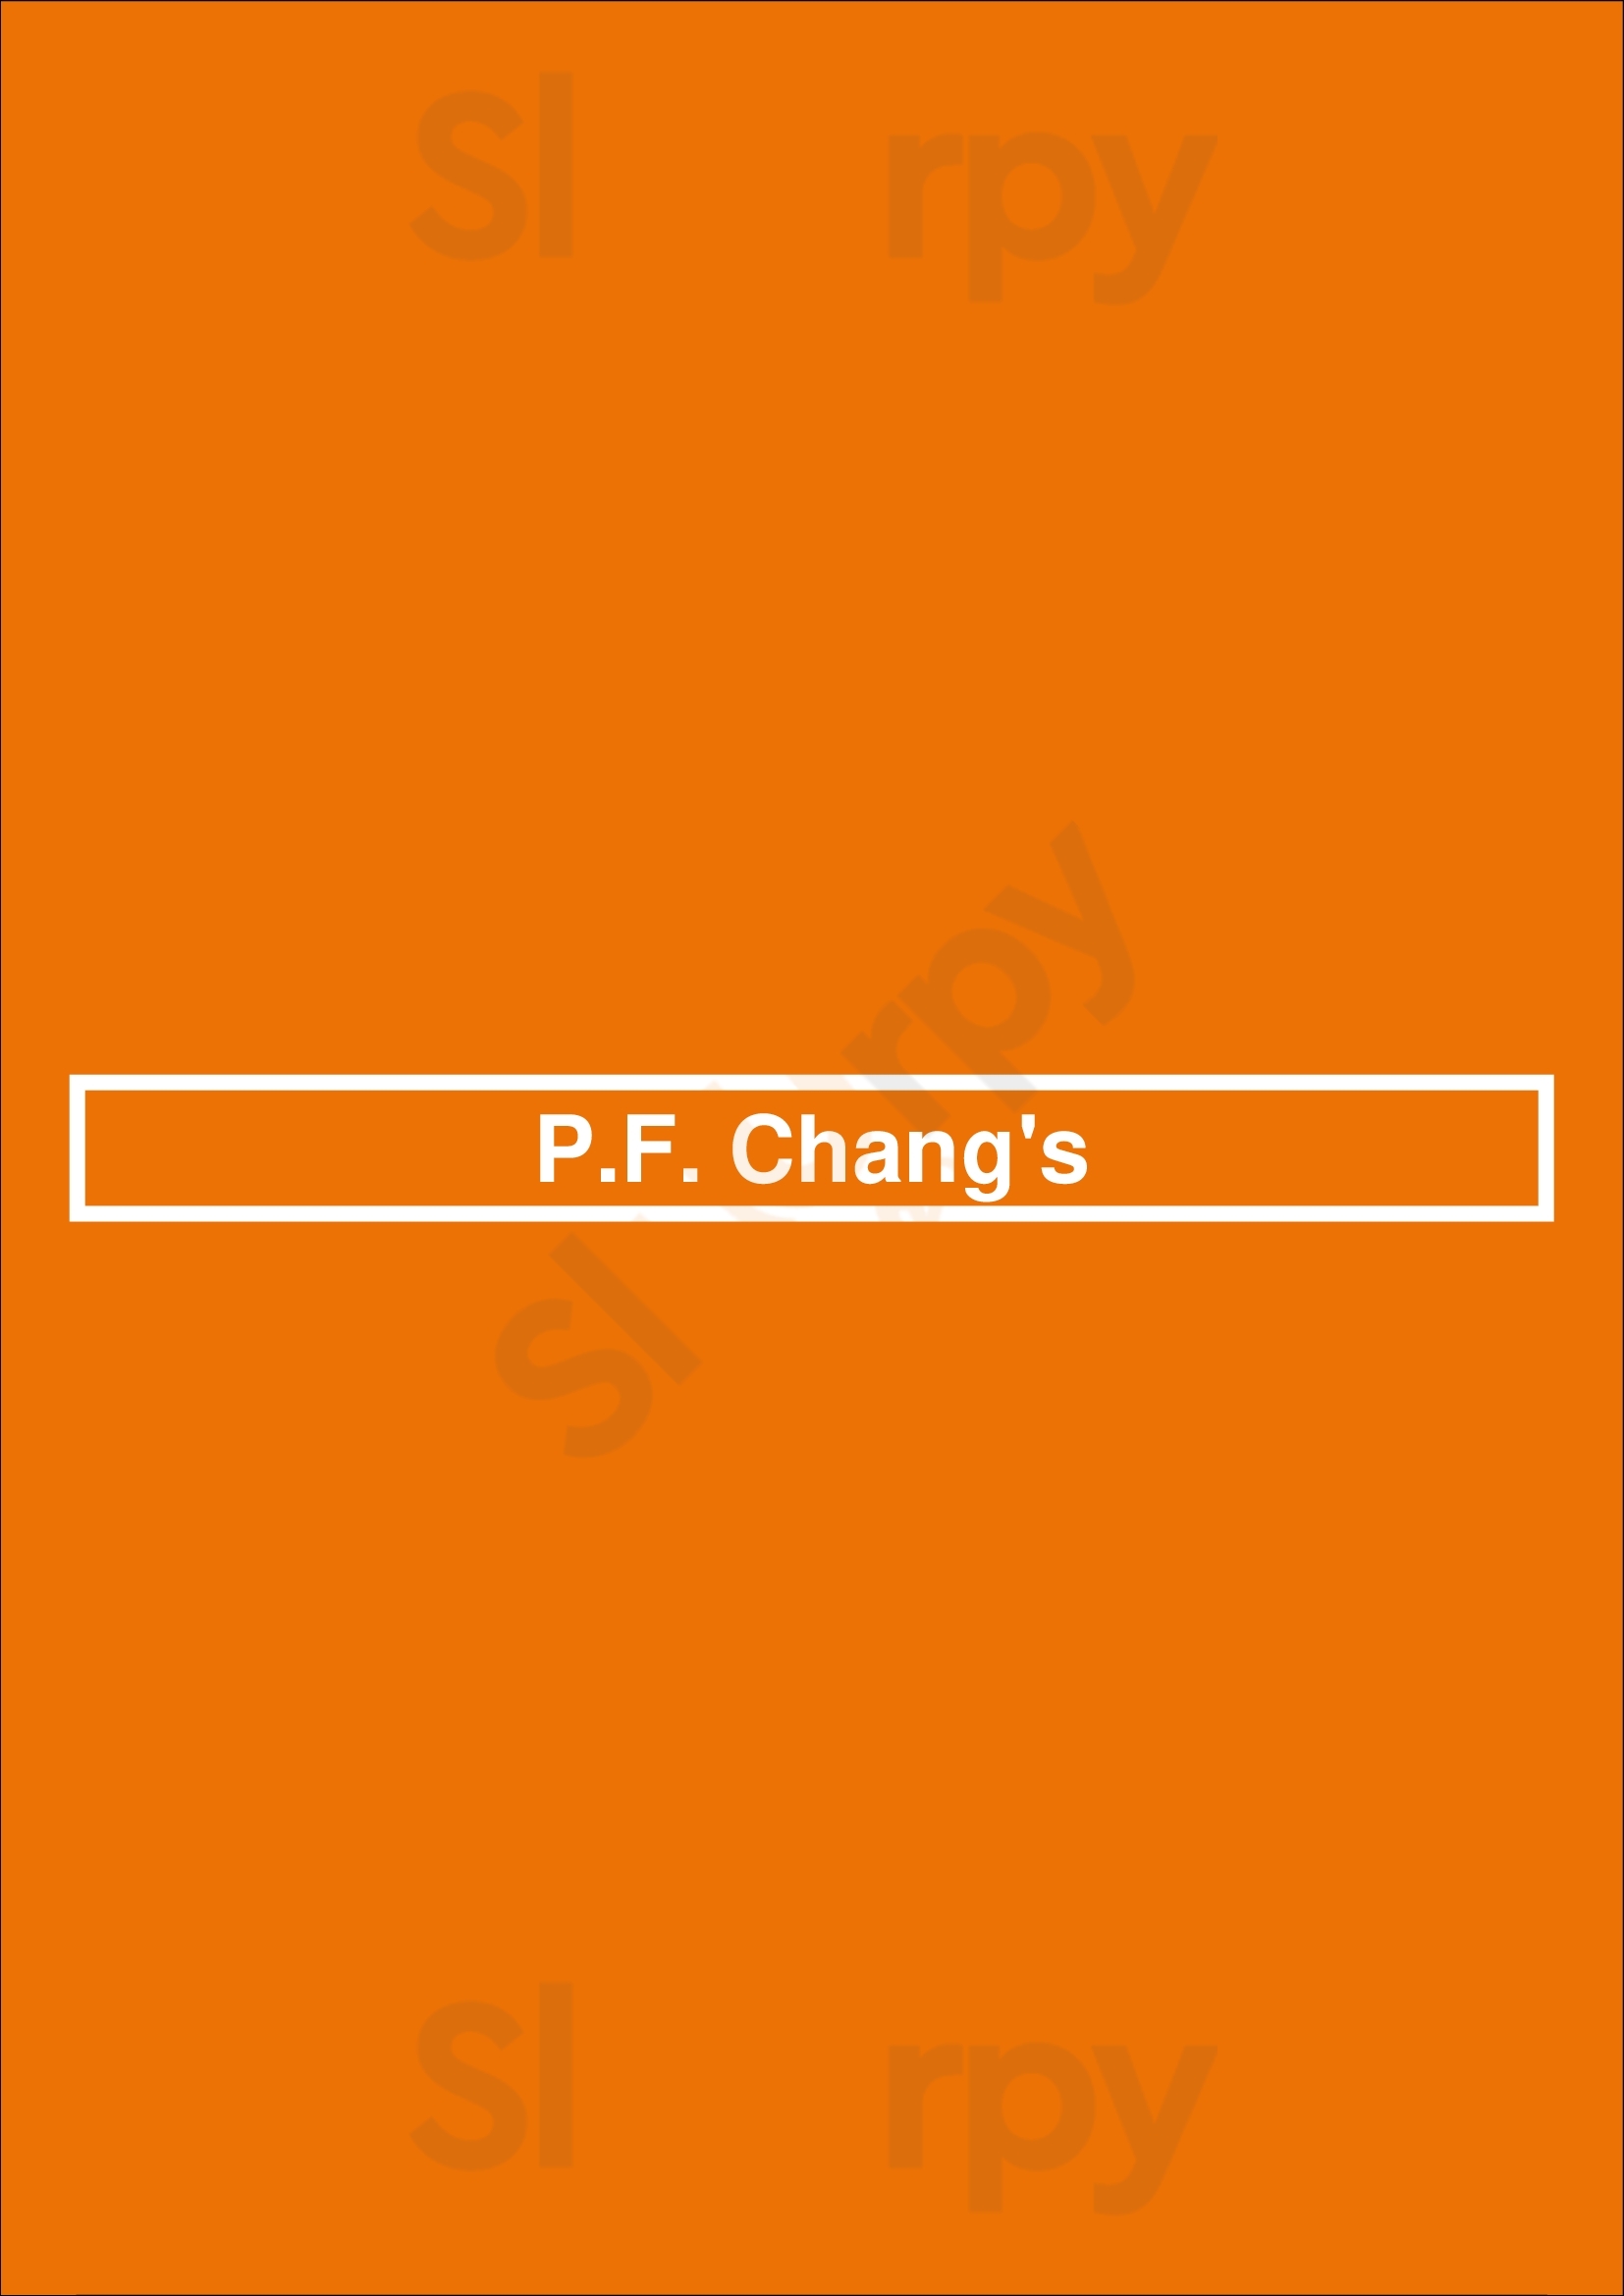 P.f. Chang's Kansas City Menu - 1